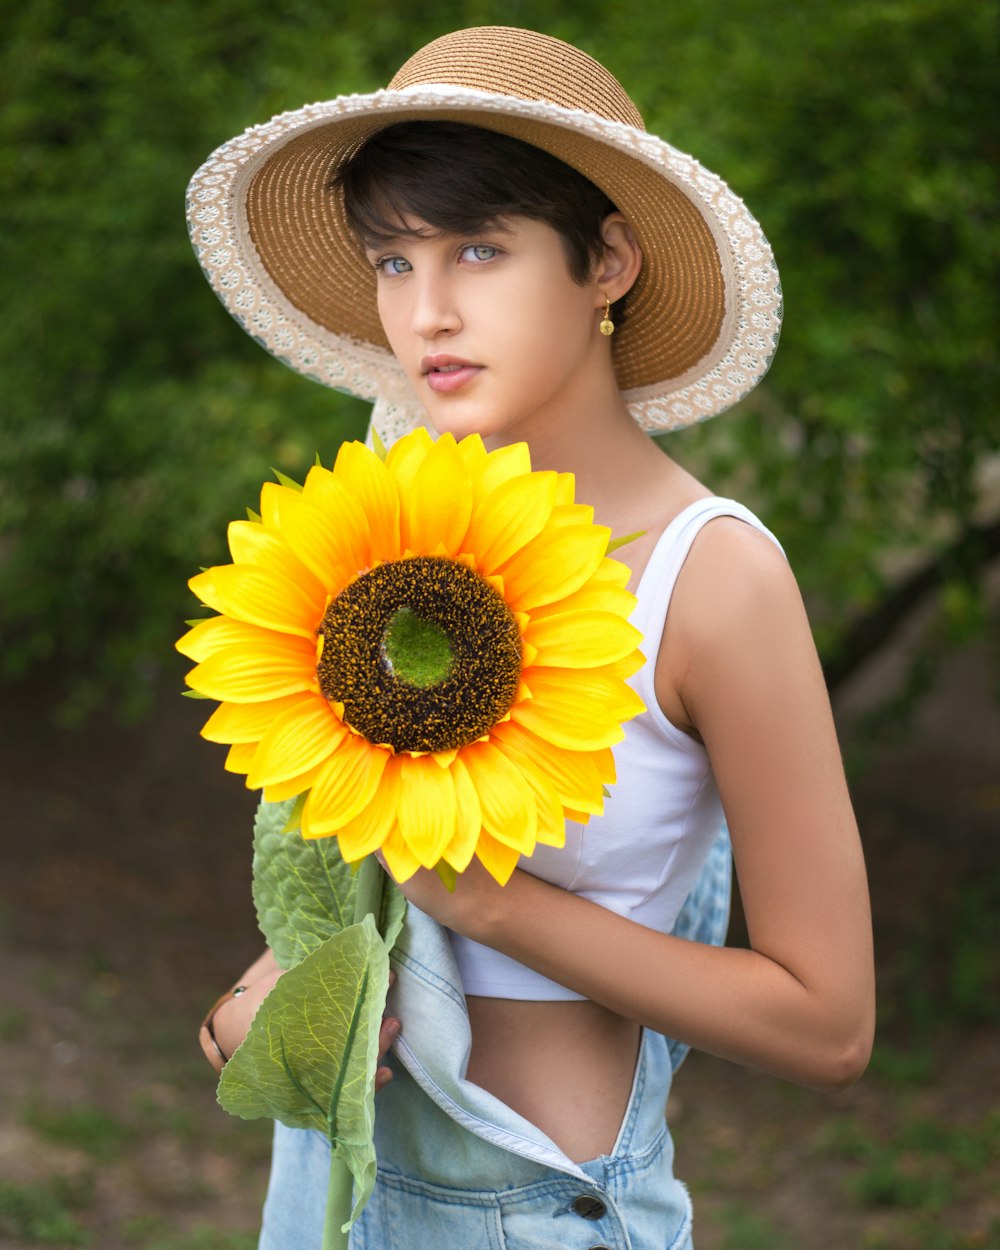 woman in yellow sleeveless dress holding sunflower